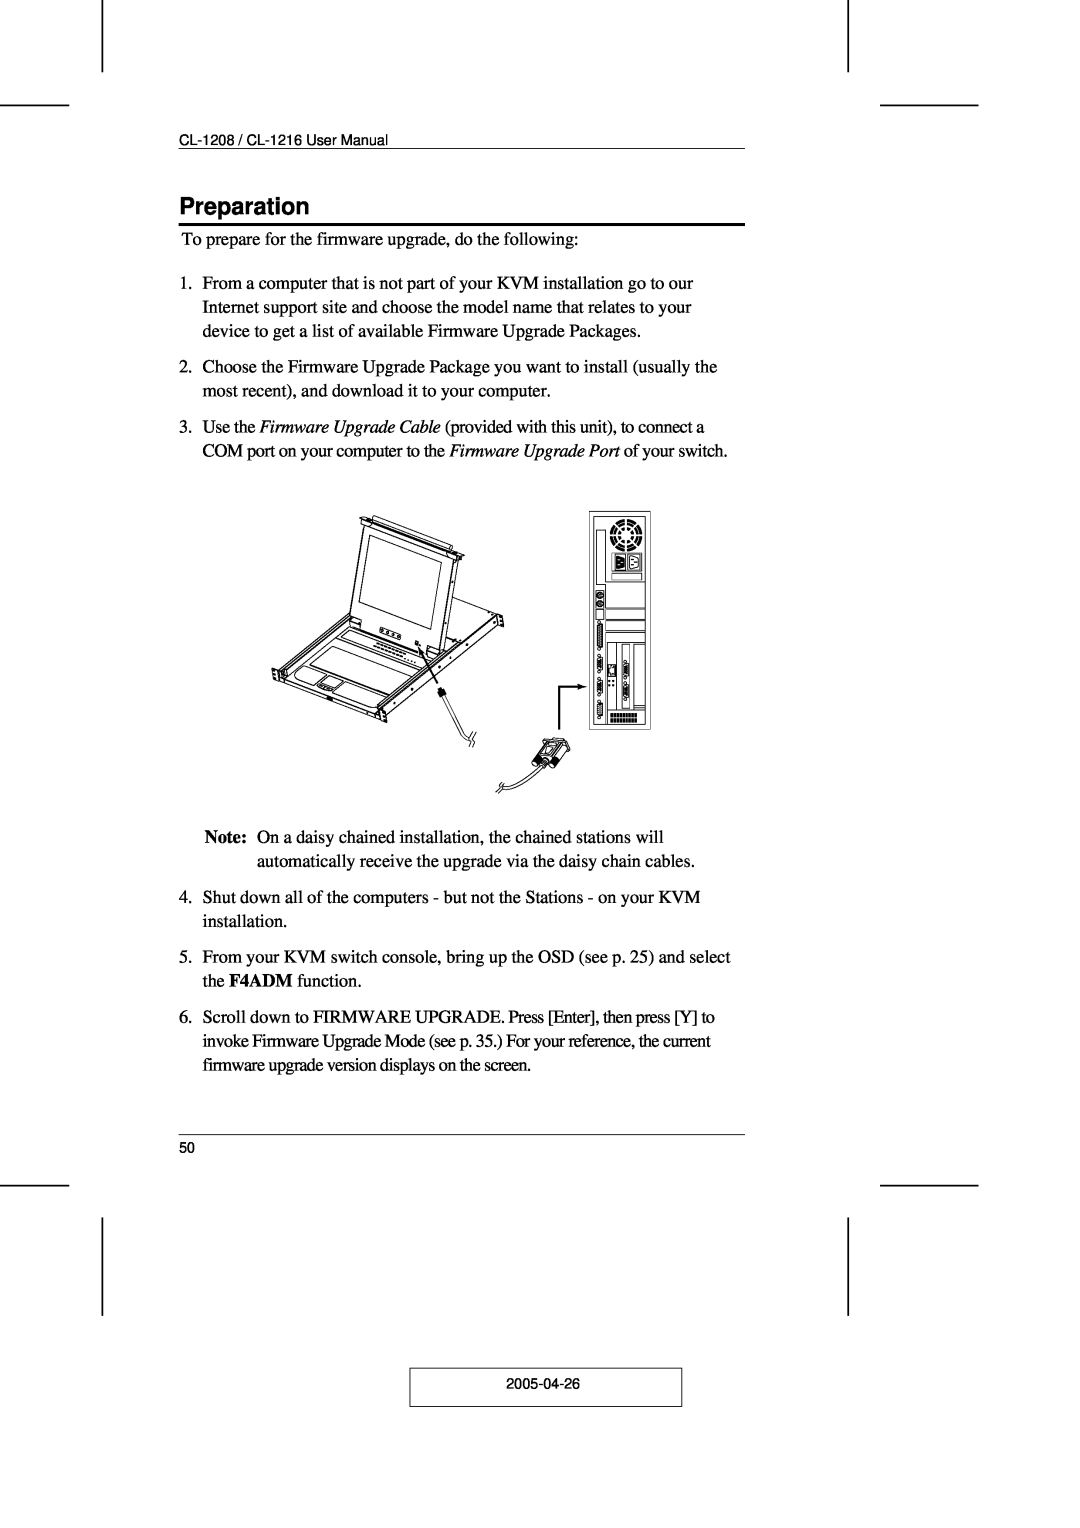 ATEN Technology CL-1208, CL-1216 user manual Preparation 